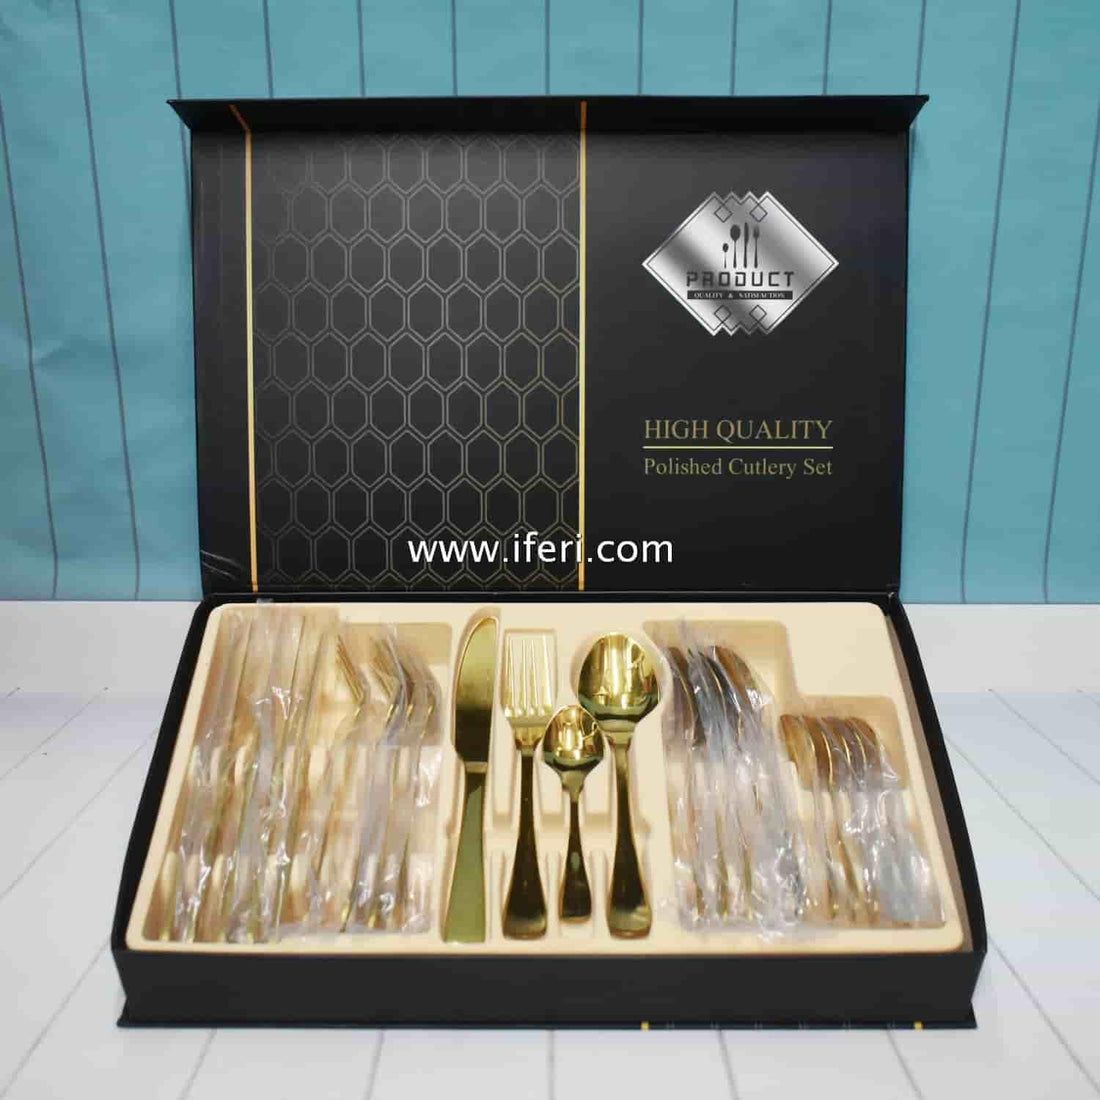 24 Pcs Stainless Steel Polished Cutlery Set TG5020 Price in Bangladesh - iferi.com